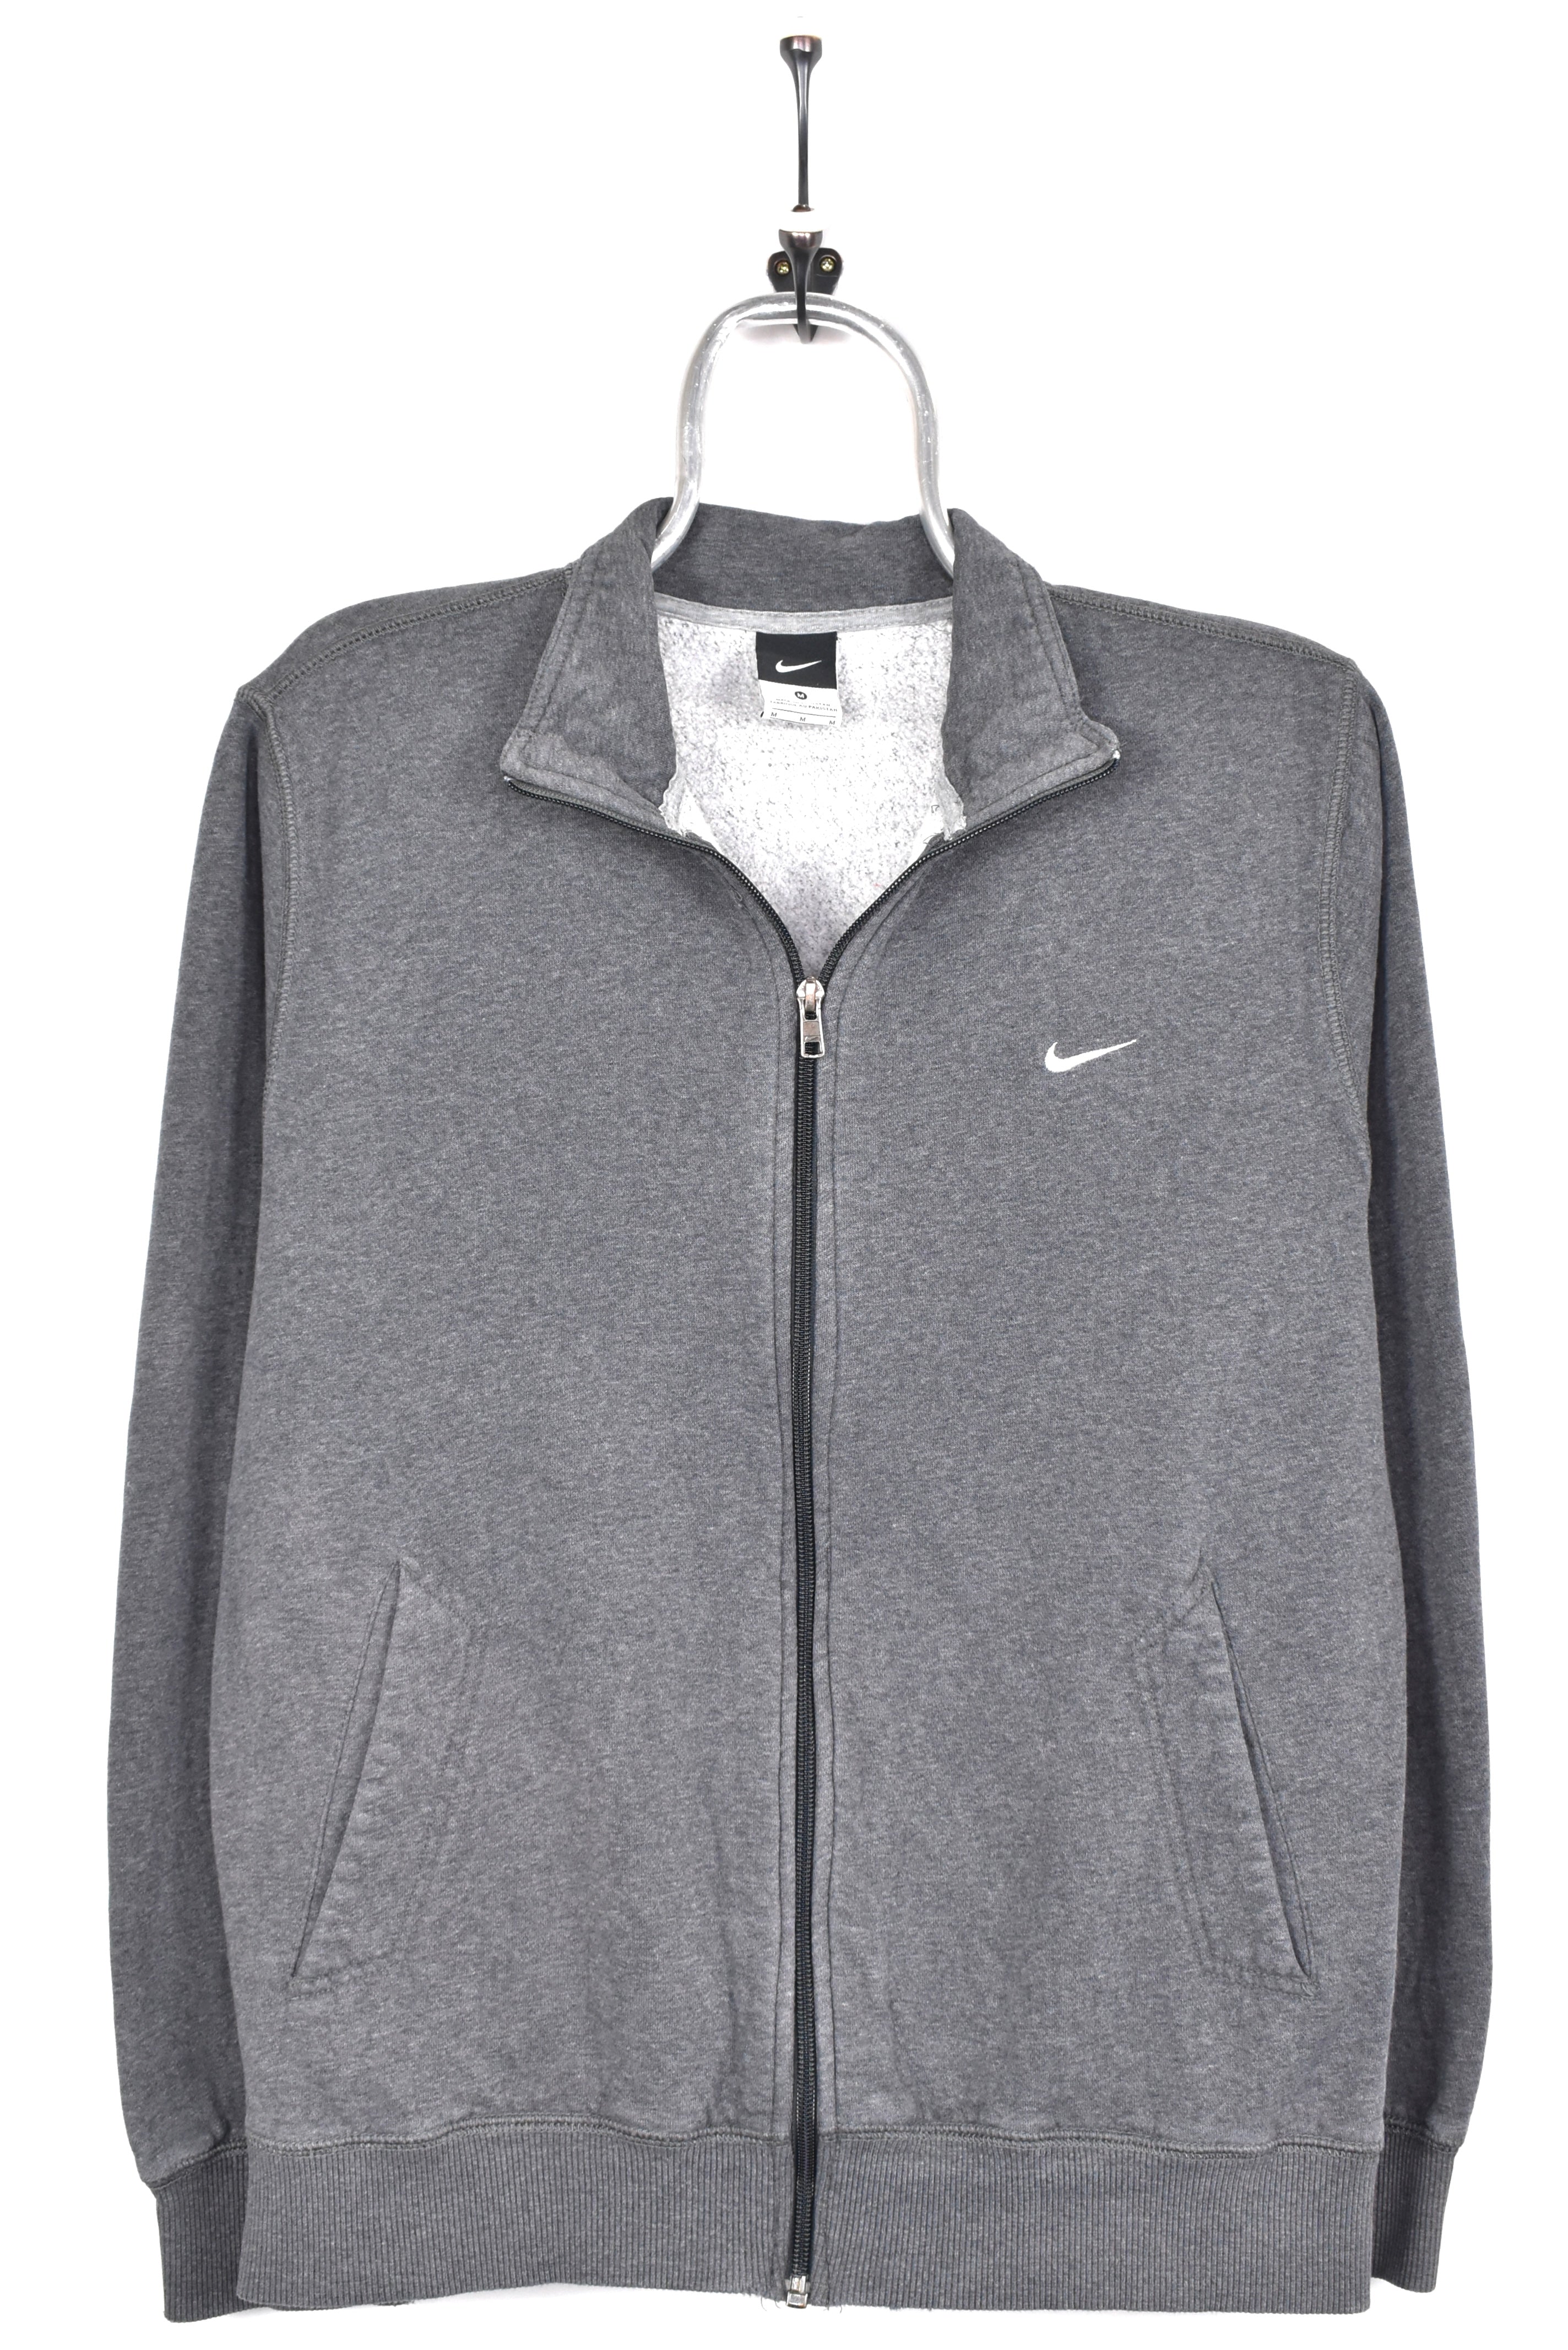 Vintage Nike jacket, grey embroidered collared sweatshirt - AU M NIKE